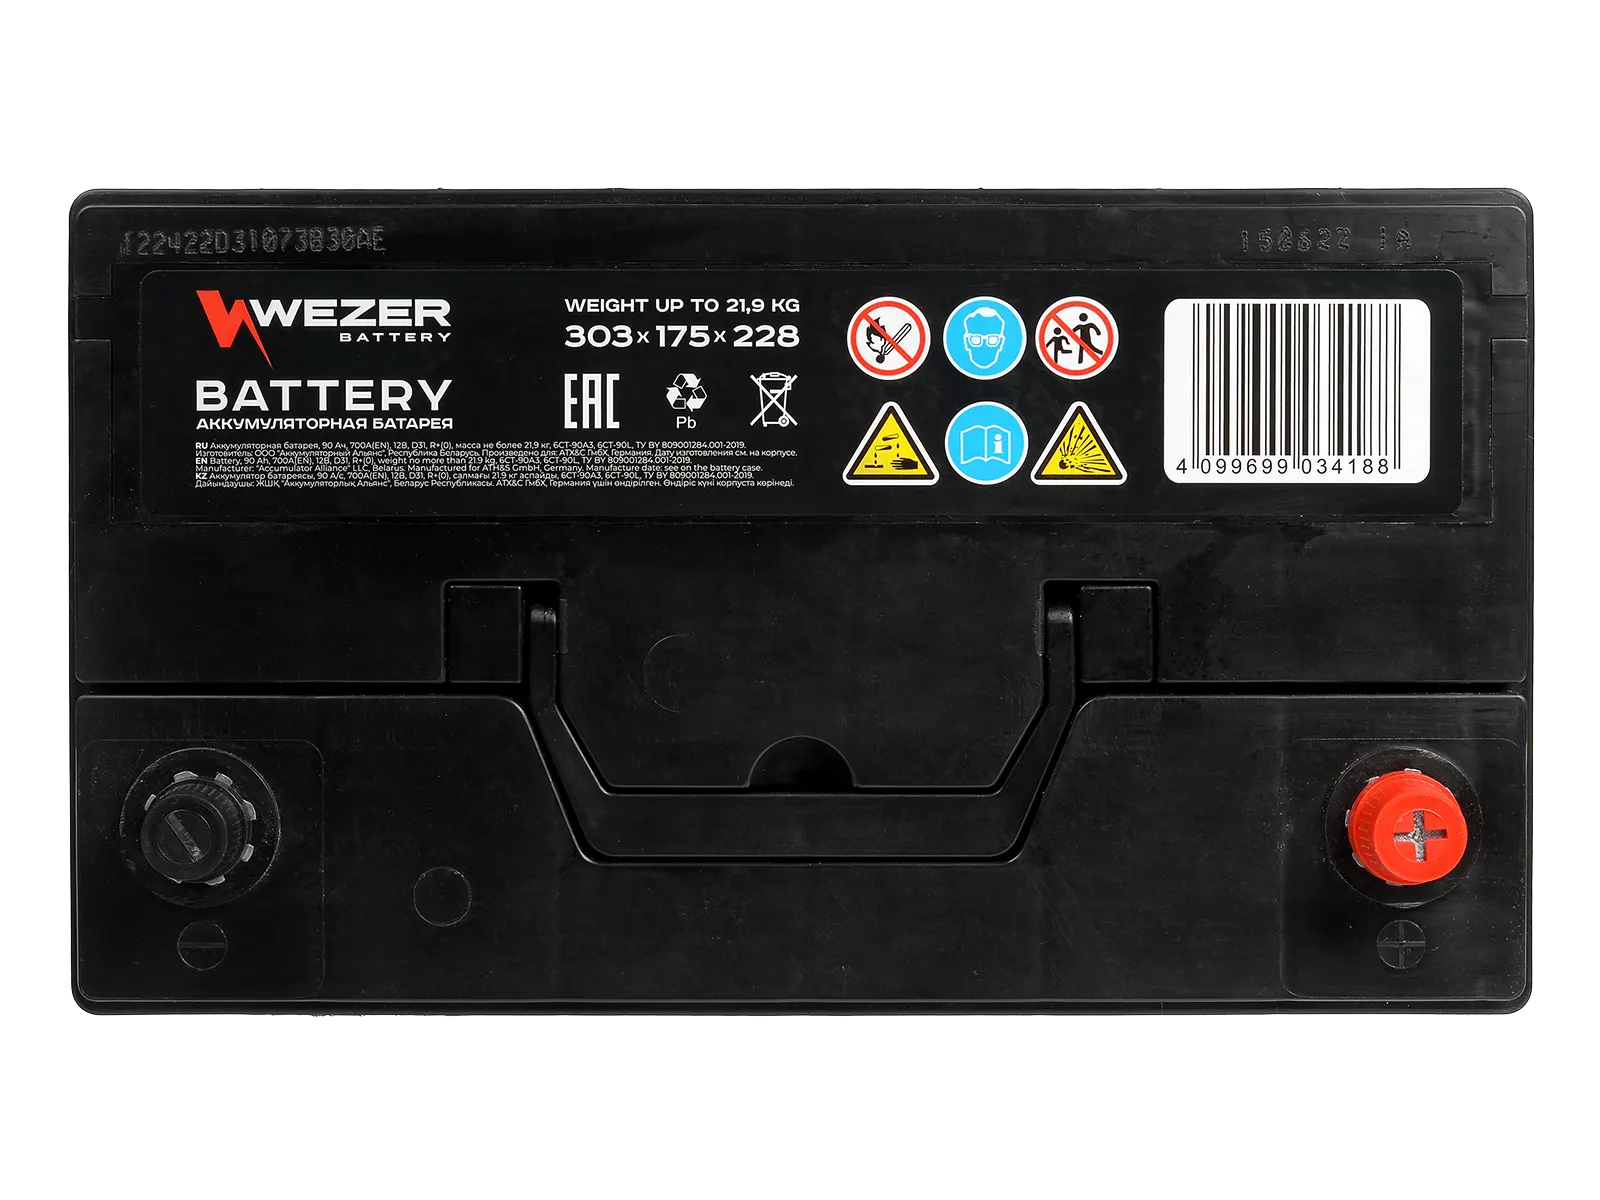 Аккумулятор WEZER 90Ah 700A (R)